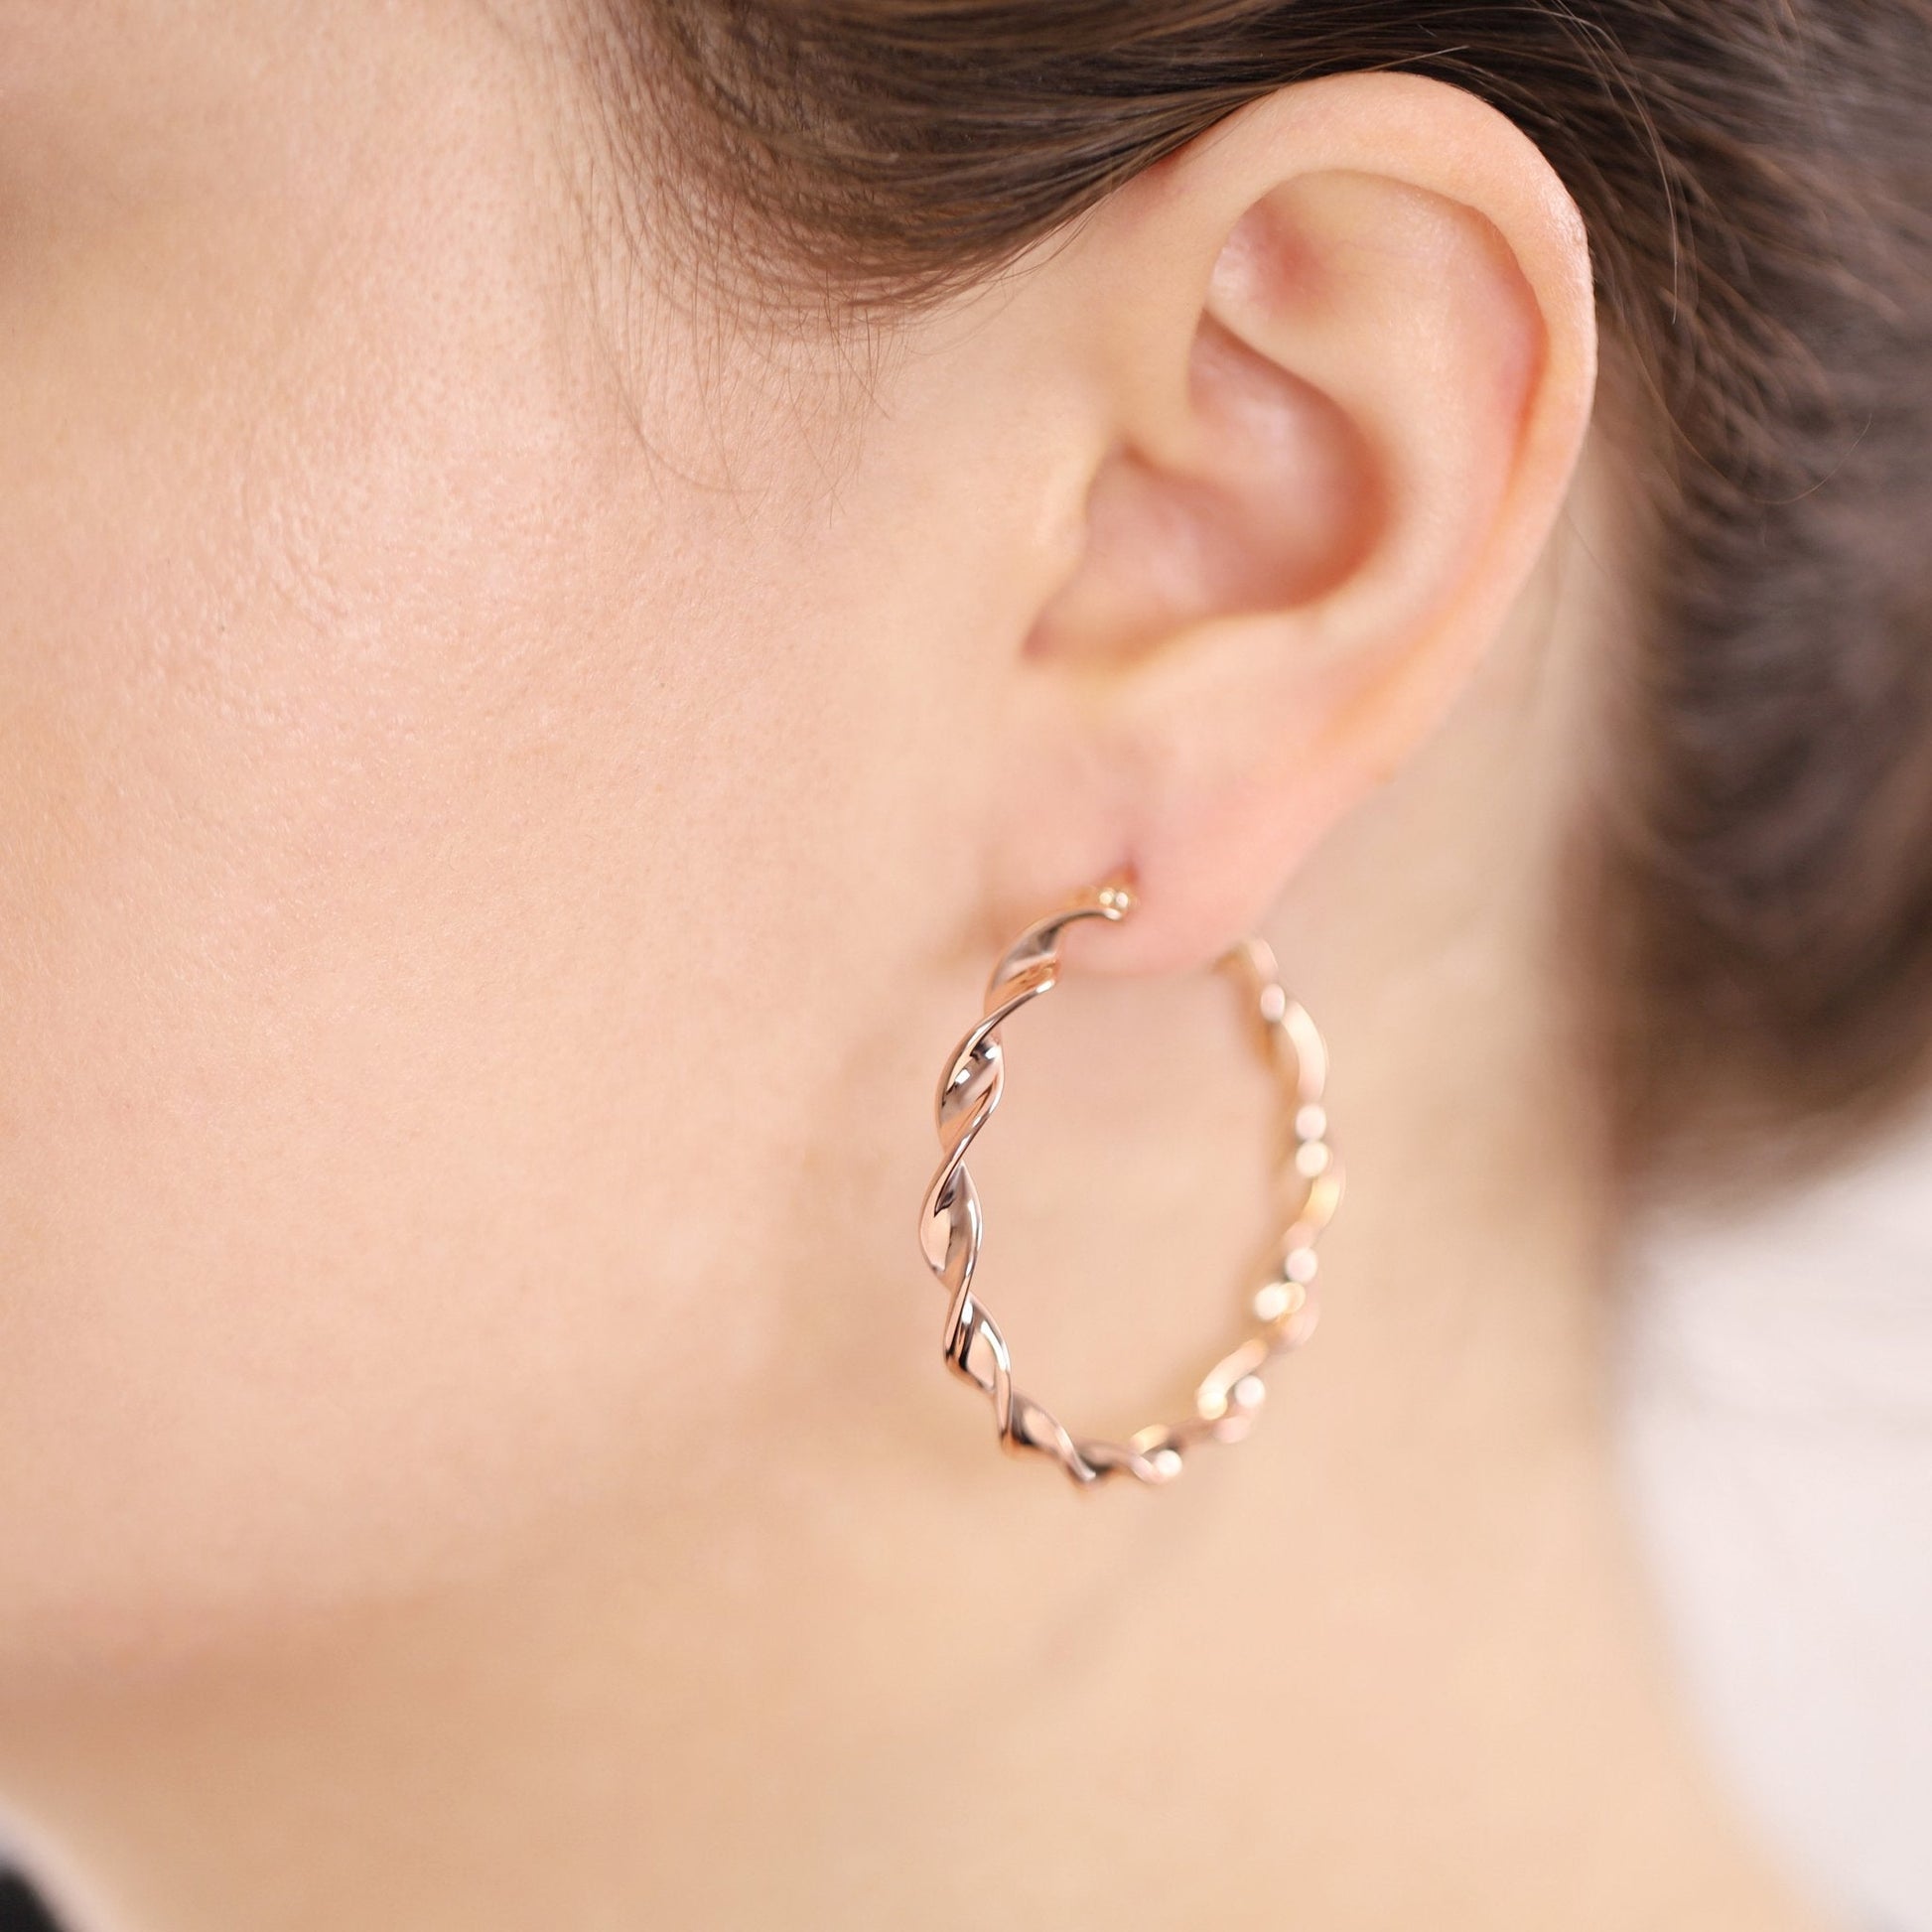 18ct 1 micron rose gold plated 925 sterling silver hoop earrings - FJewellery